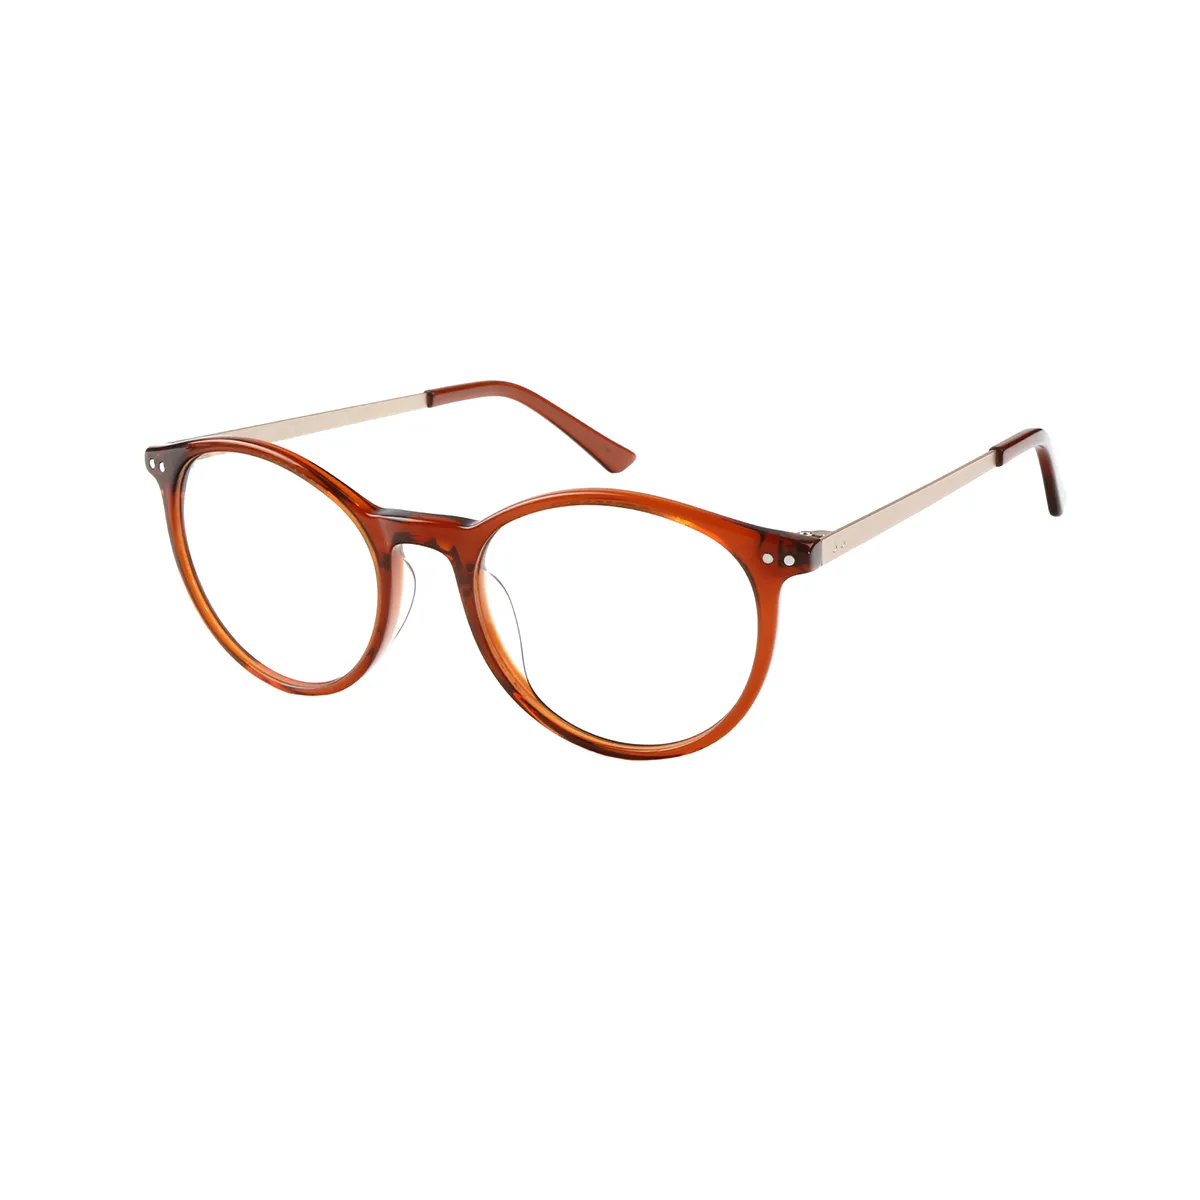 Kenna - Oval Brown Glasses for Men & Women